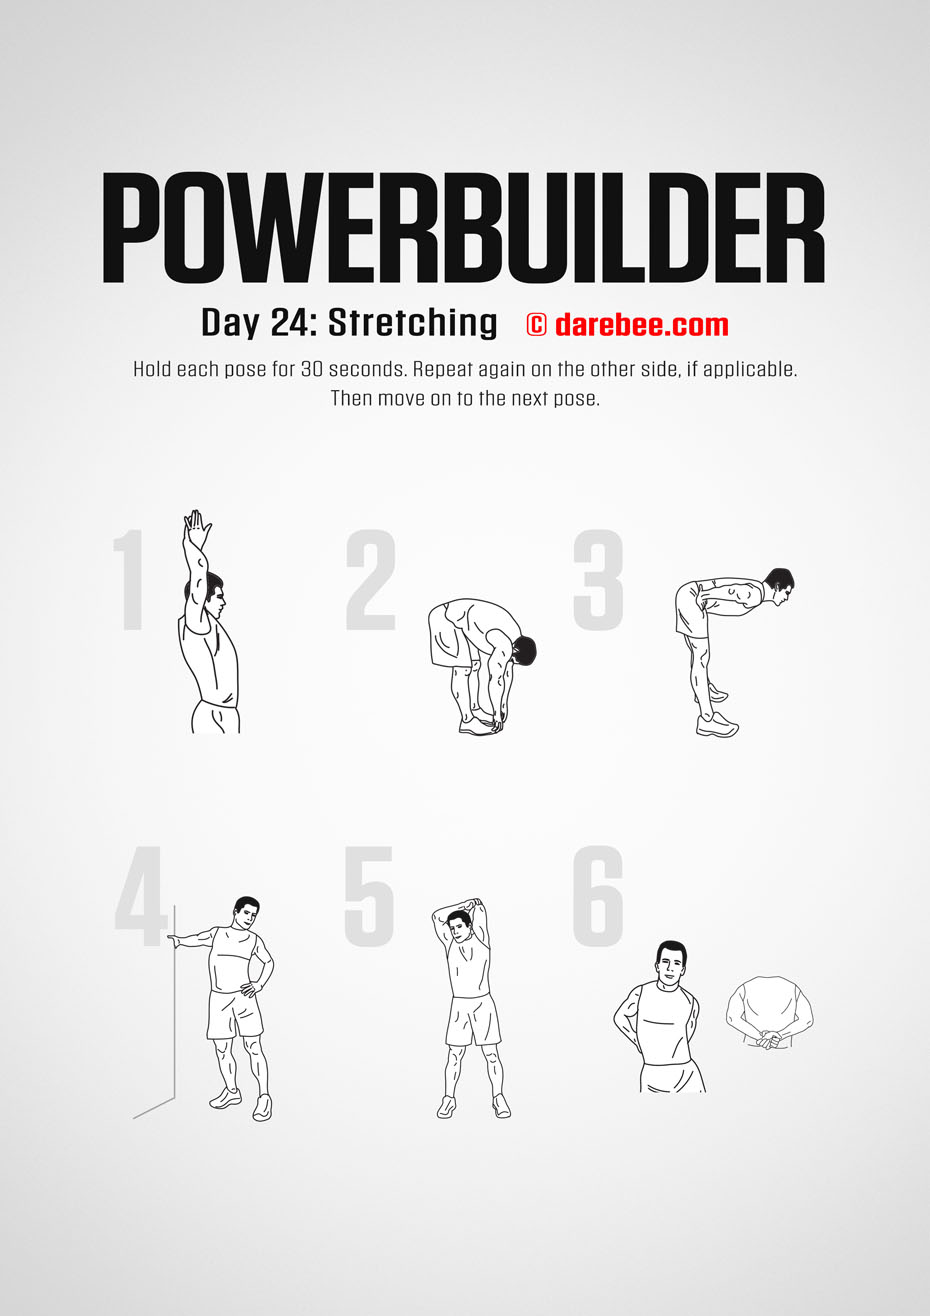 POWERBUILDER - 30 Day Bodybuilding And Strength Program by DAREBEE